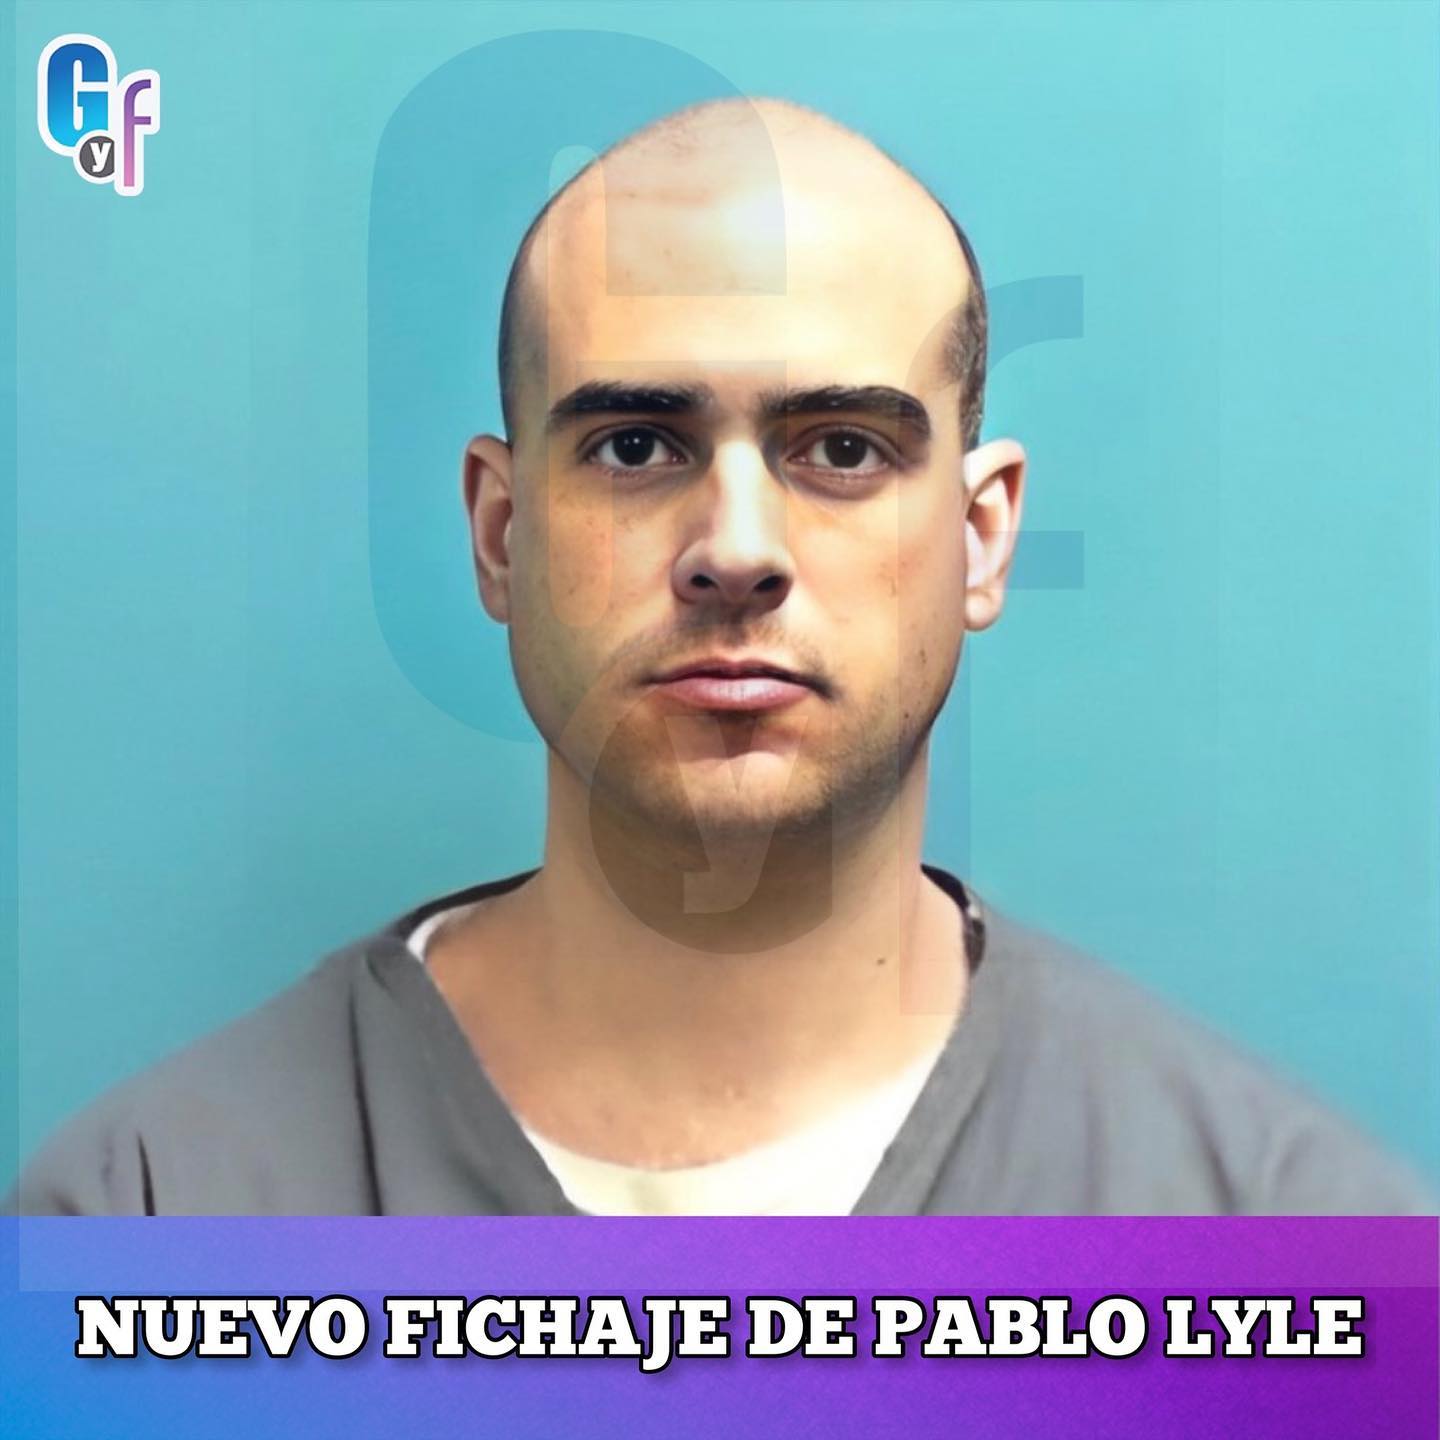 Pablo Lyle calvo